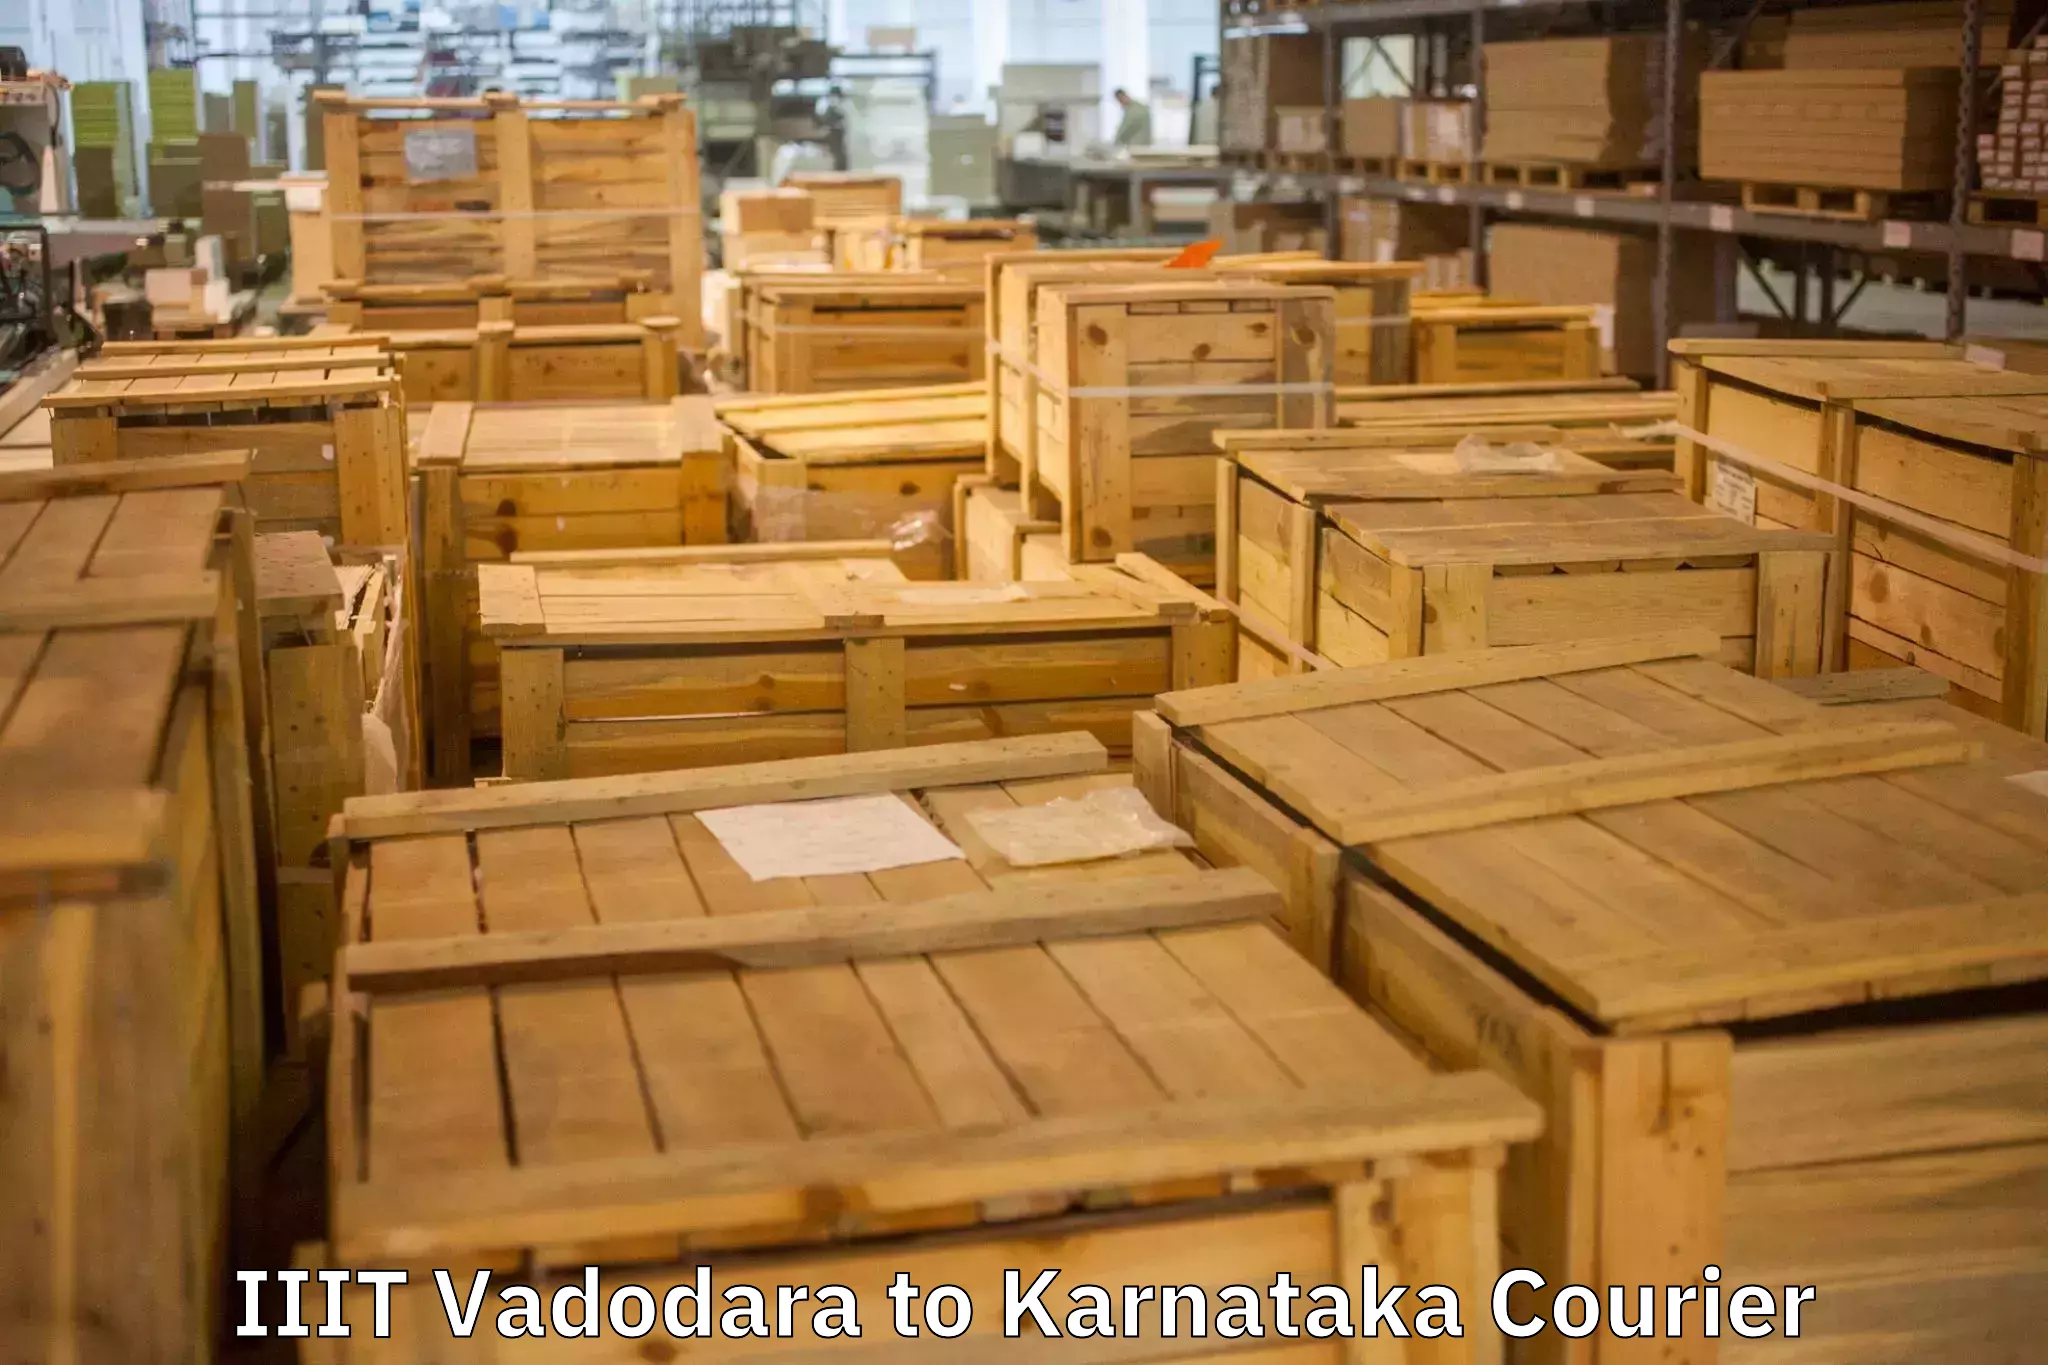 Professional relocation services IIIT Vadodara to Karnataka